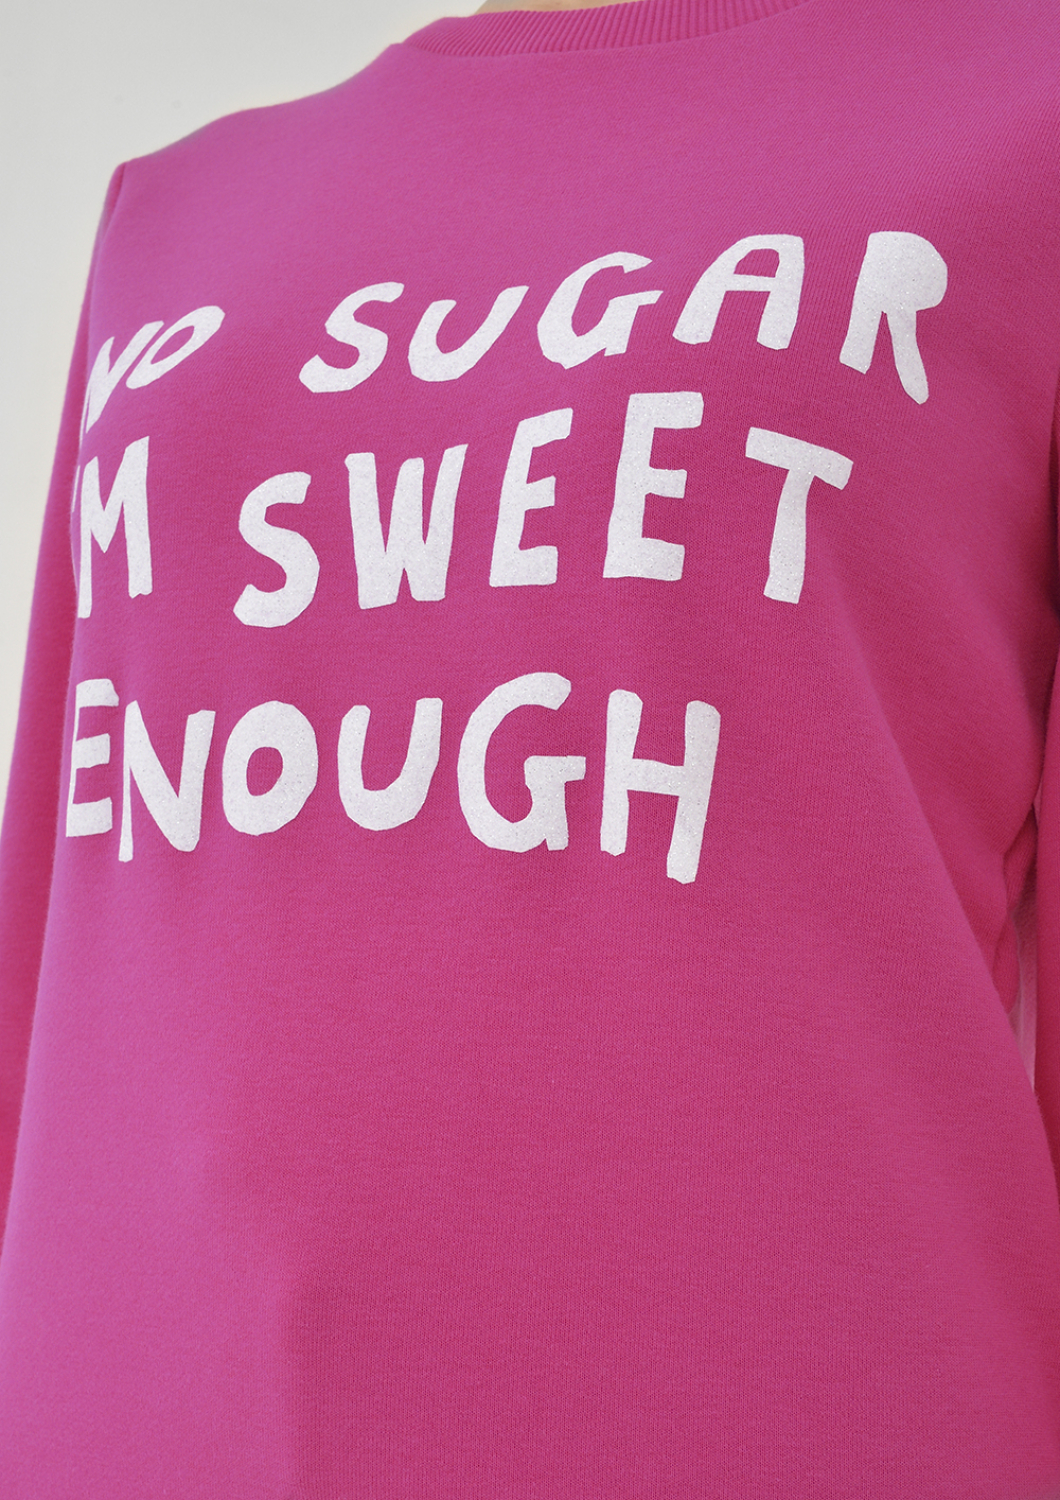 No Sugar sweatshirt. Female.